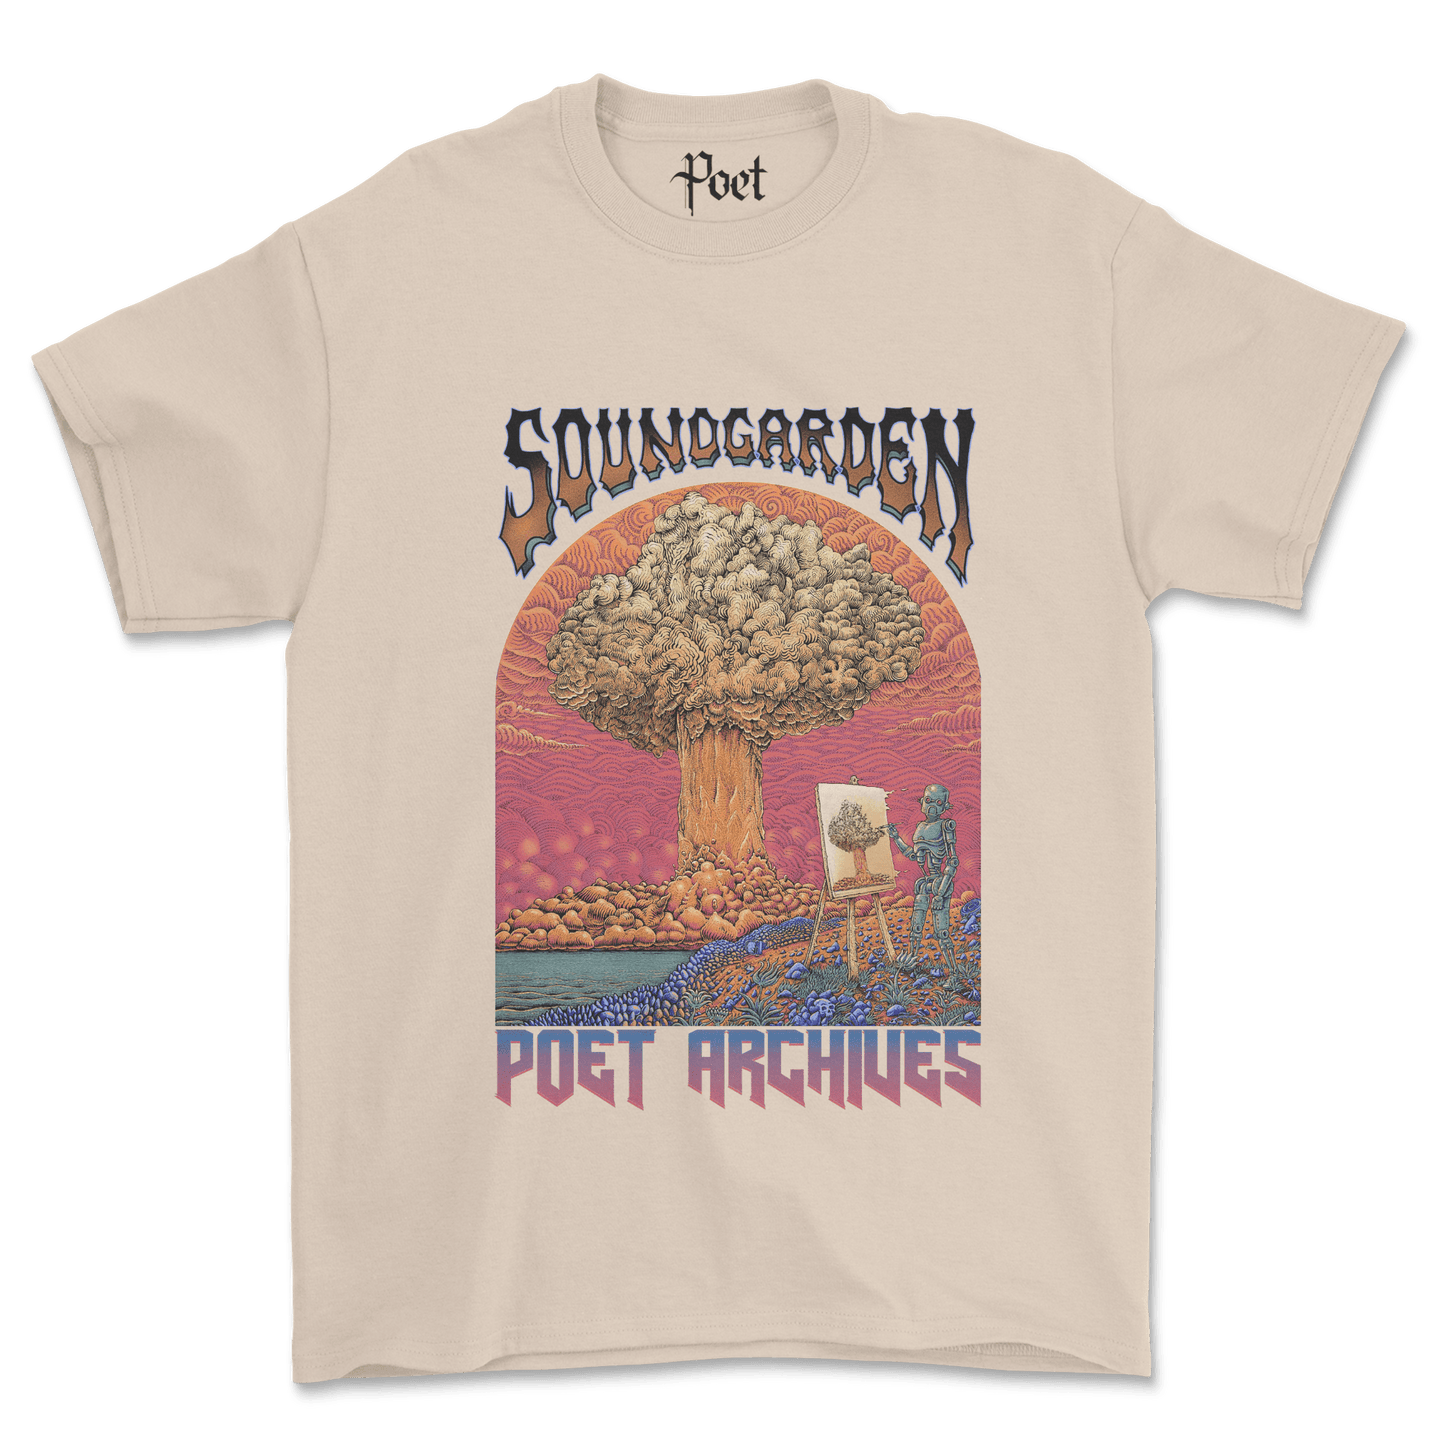 Soundgarden T-Shirt - Poet Archives